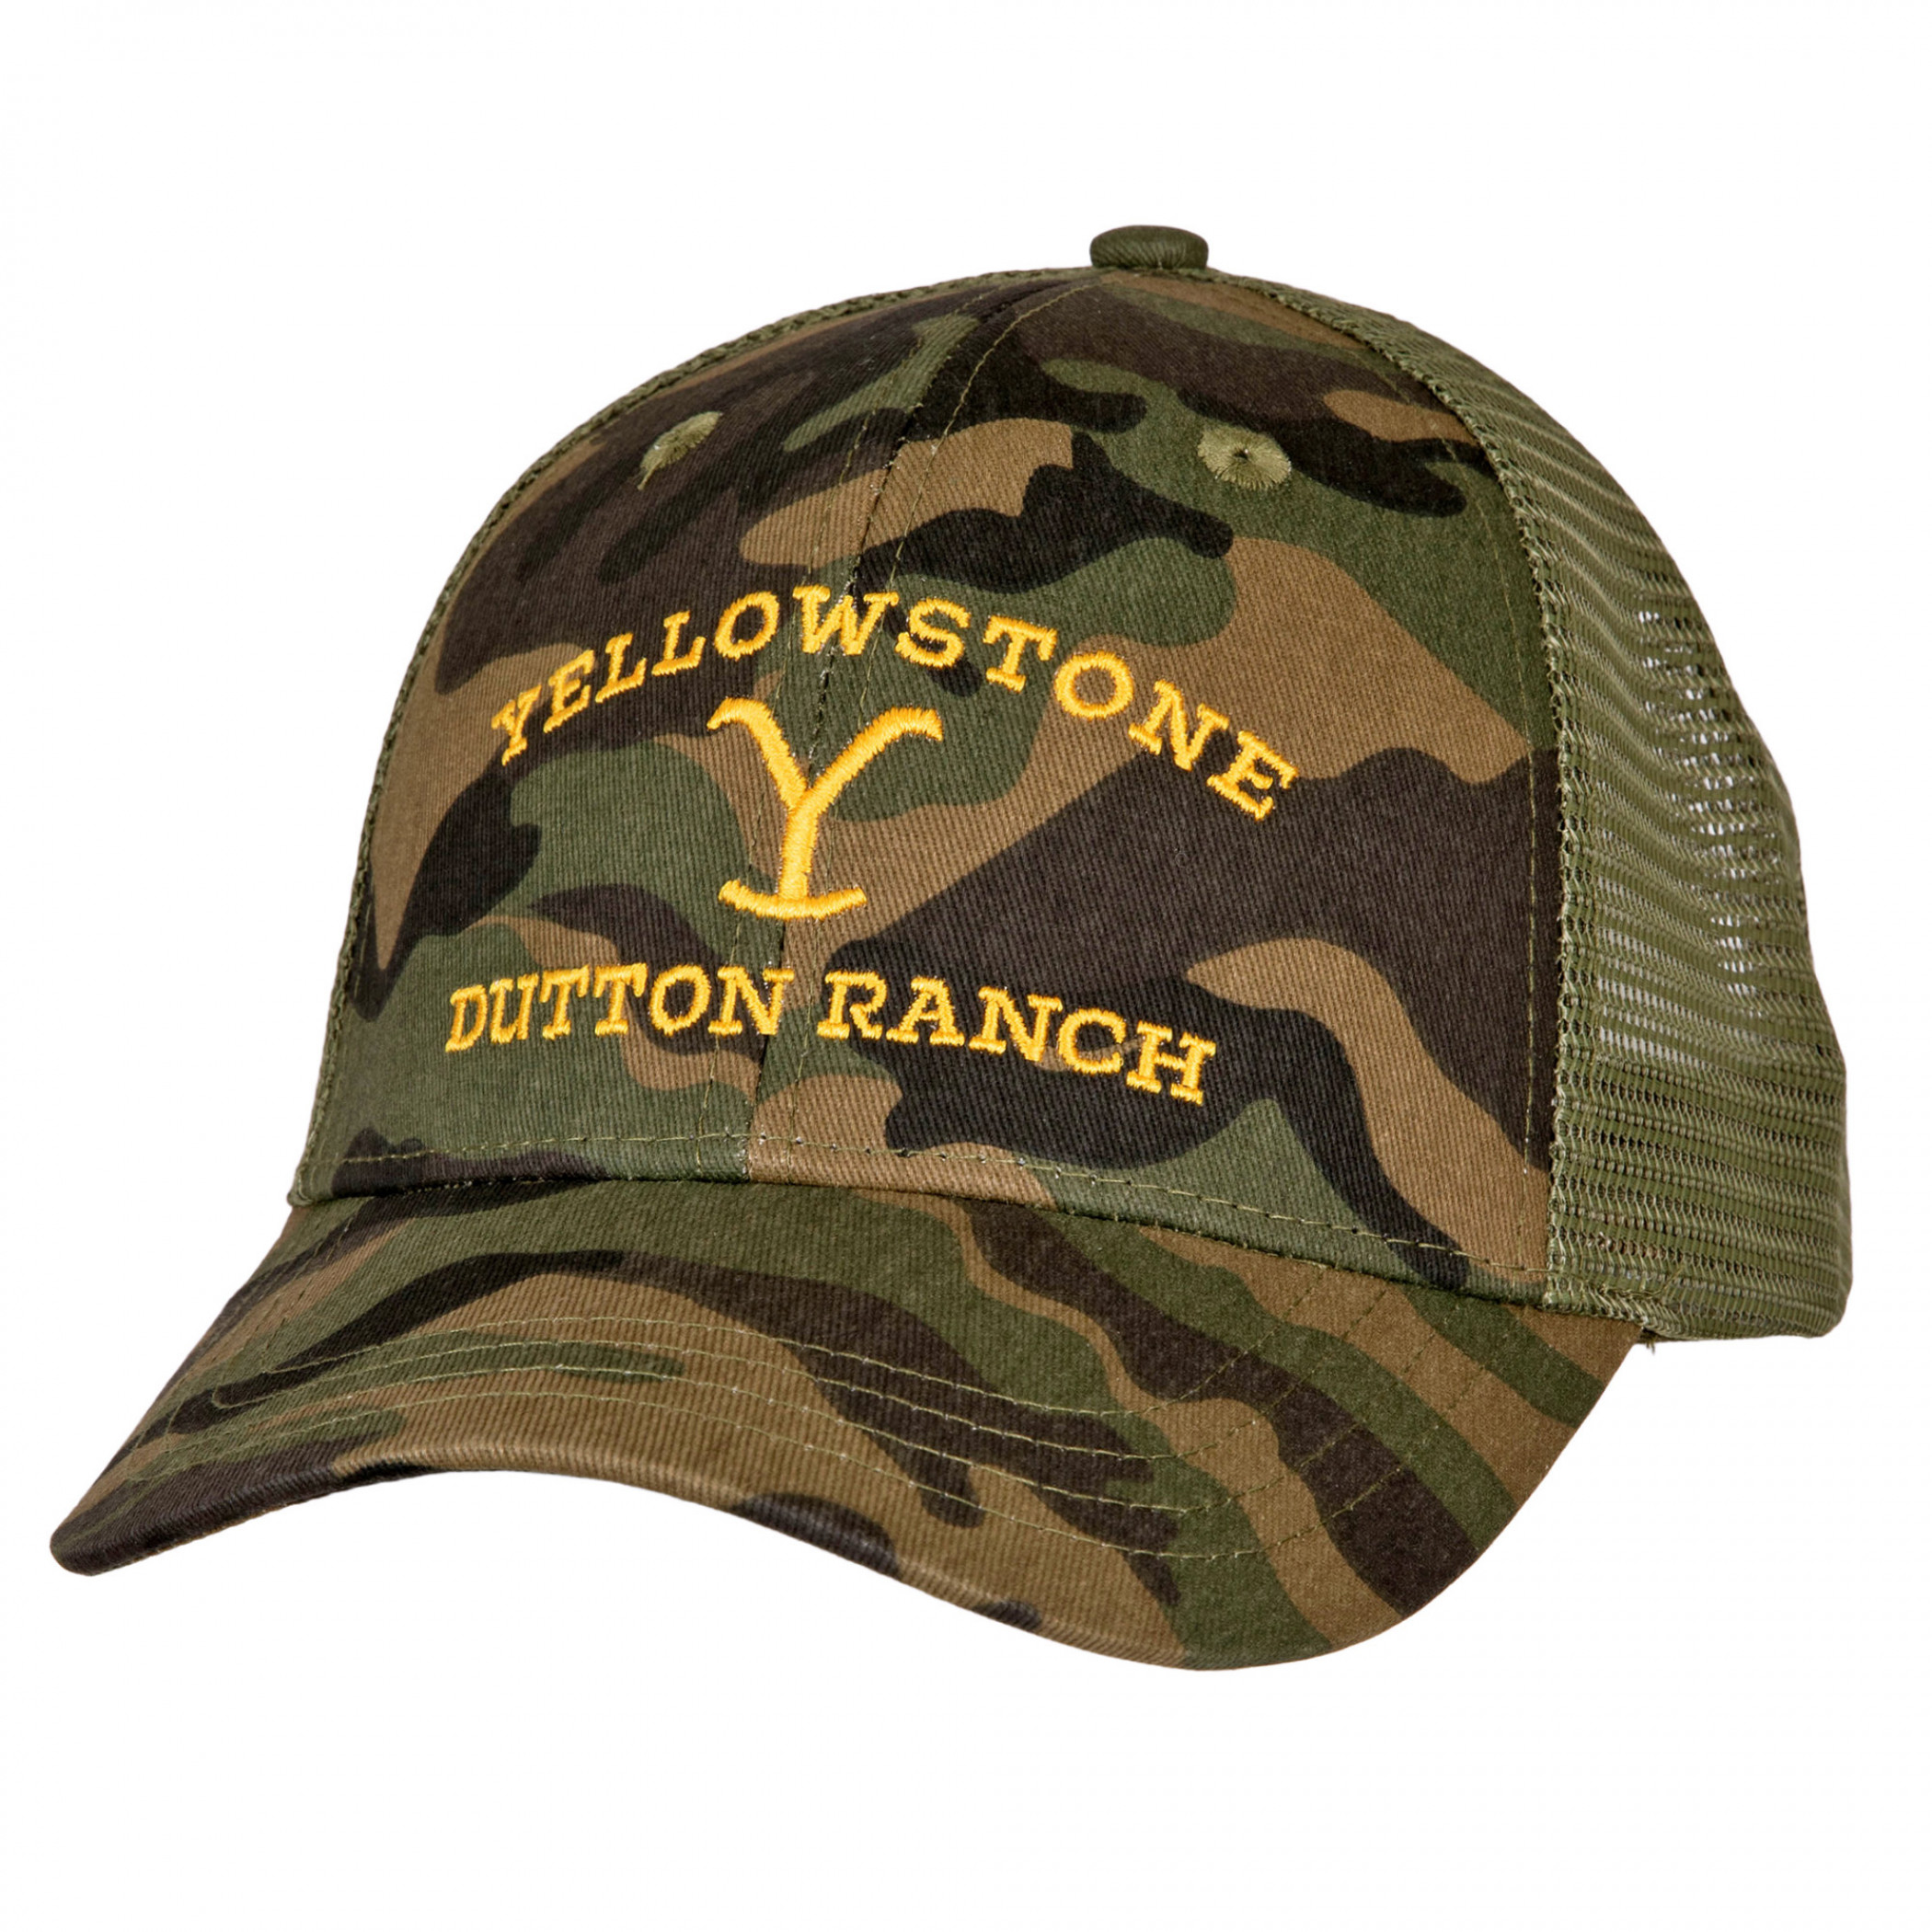 Yellowstone Dutton Ranch Camo Adjustable Trucker Hat